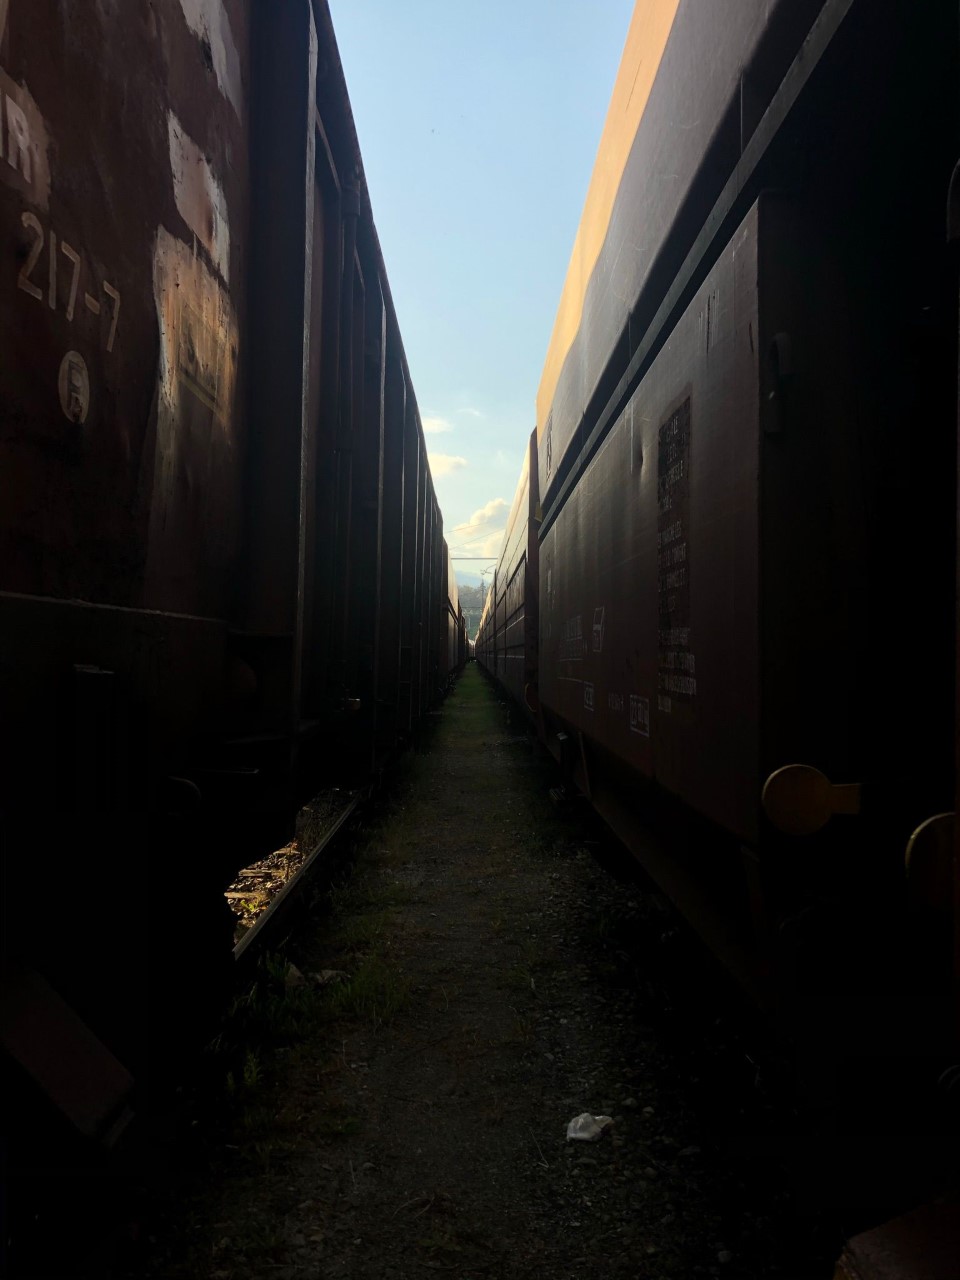 Güterzüge